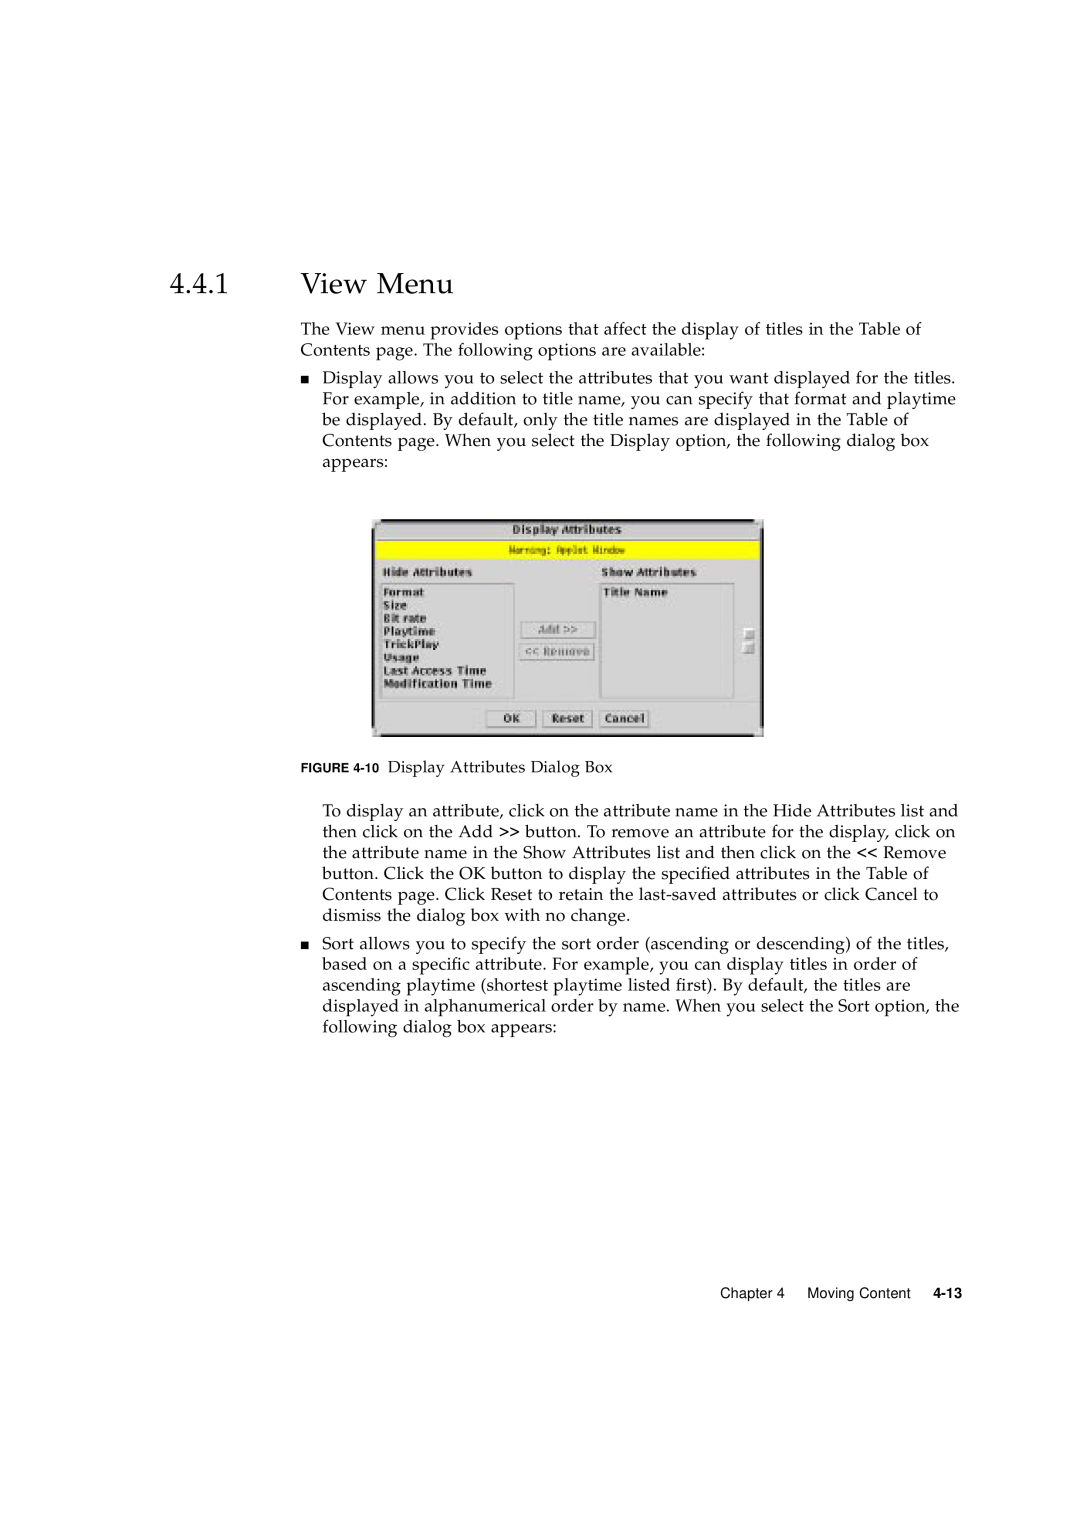 Sun Microsystems 2.1 manual View Menu, 10 Display Attributes Dialog Box 